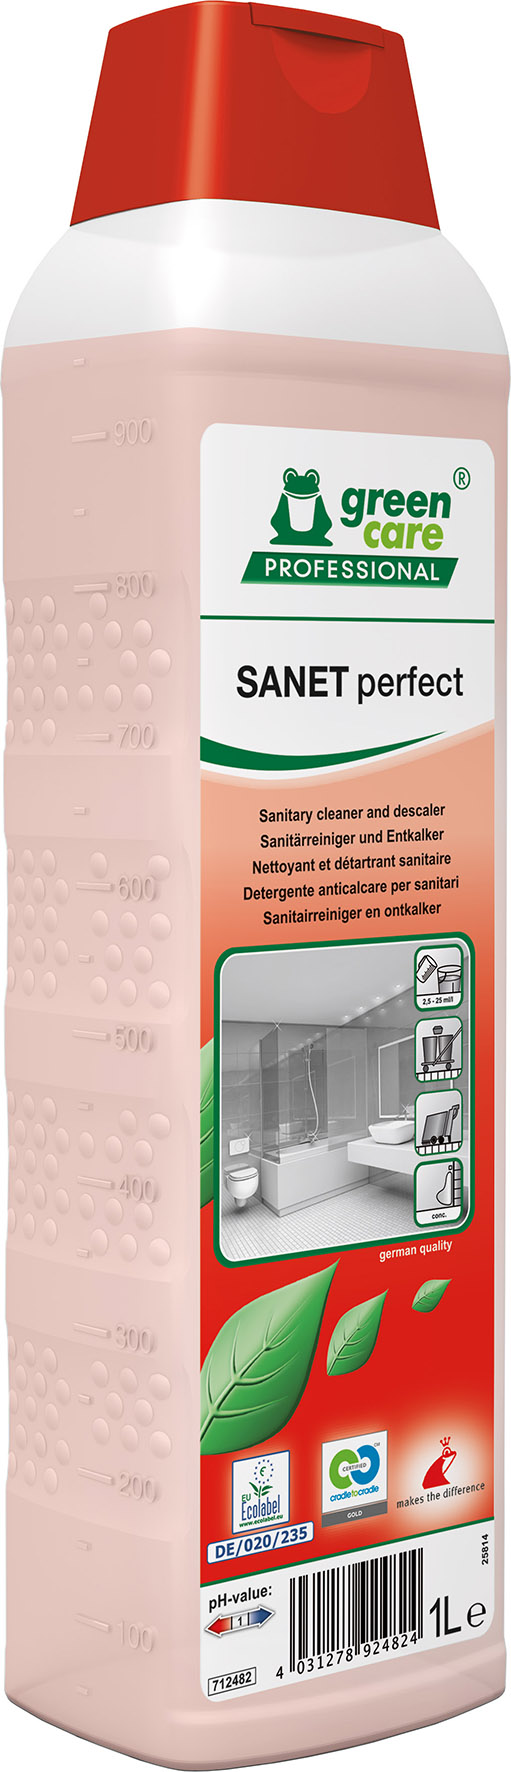 [2260552] Sanitetsrent SANET perfect 1L